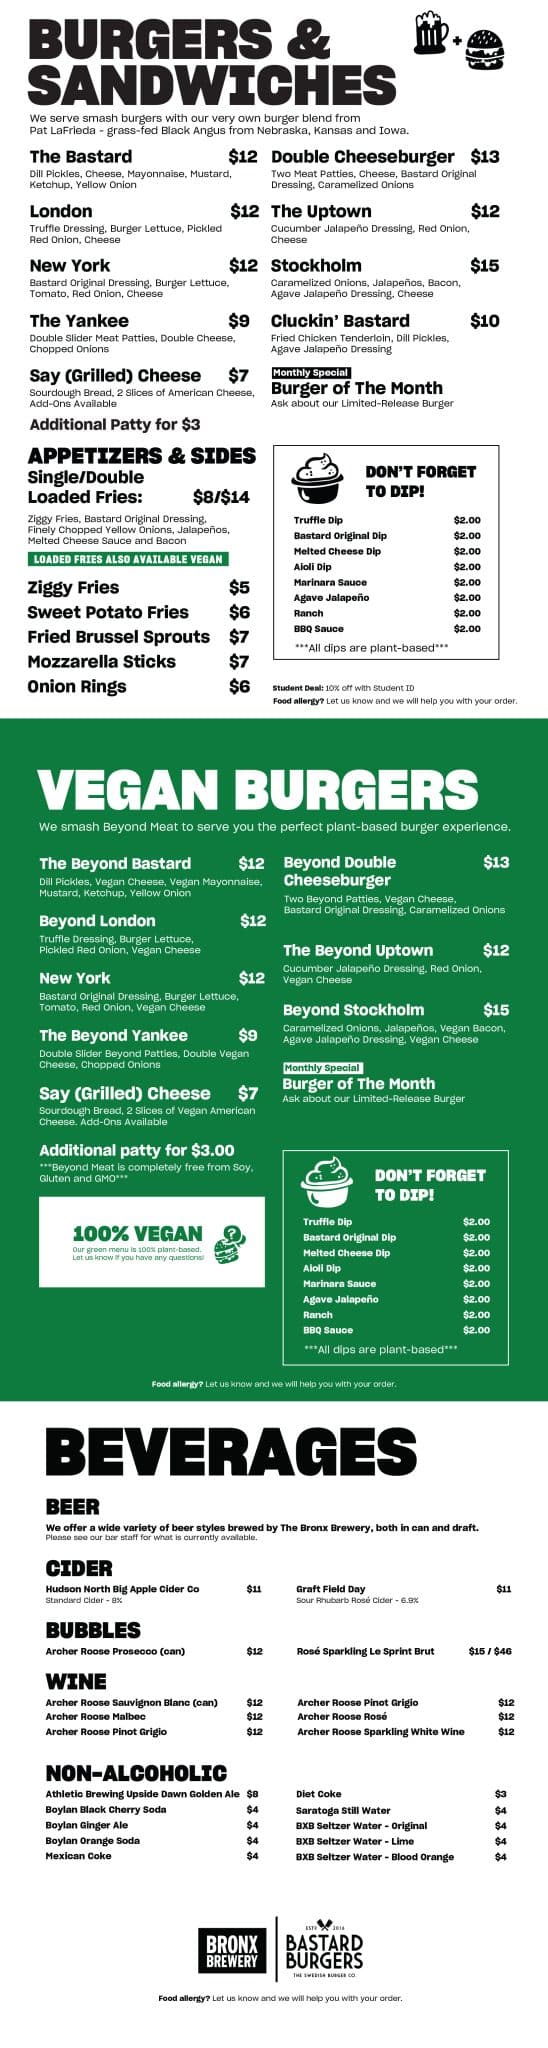 View bastard burgers menu